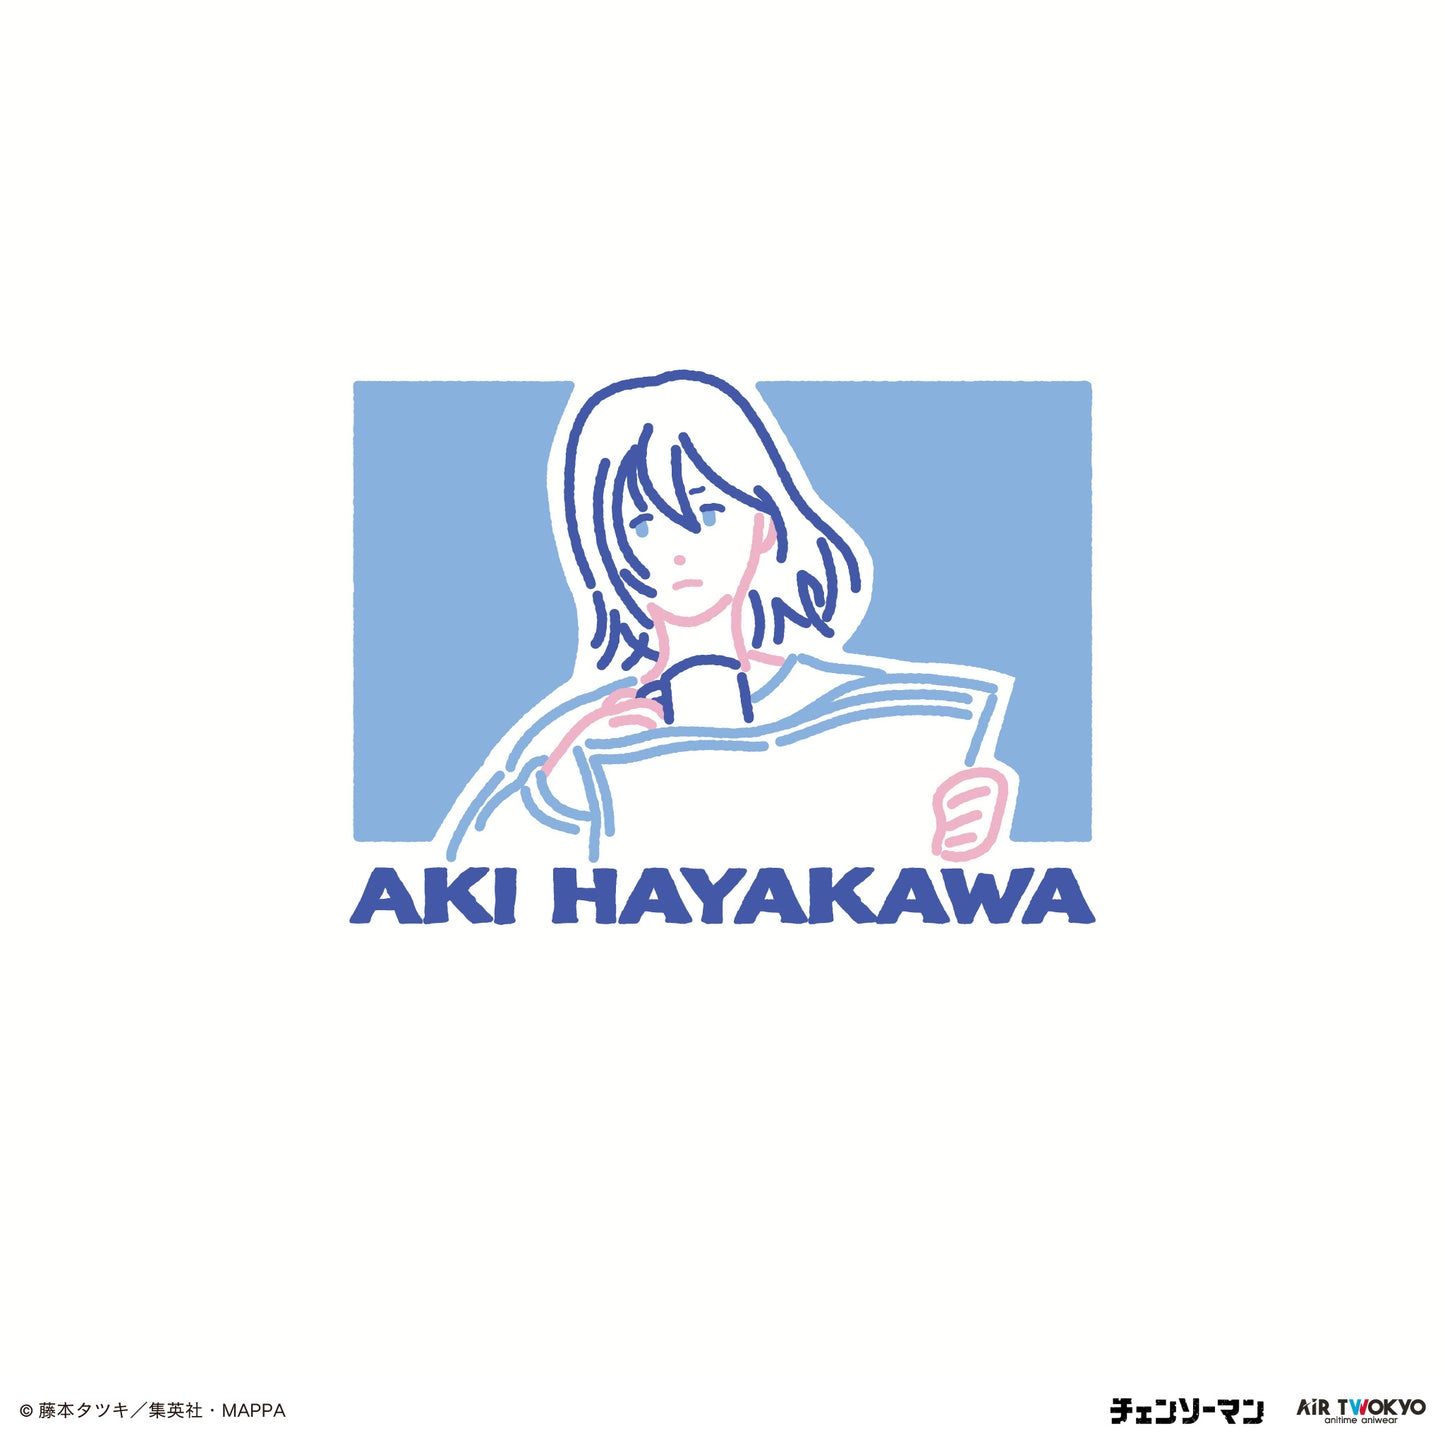 TVアニメ『チェンソーマン』シーンイラストTシャツ 2